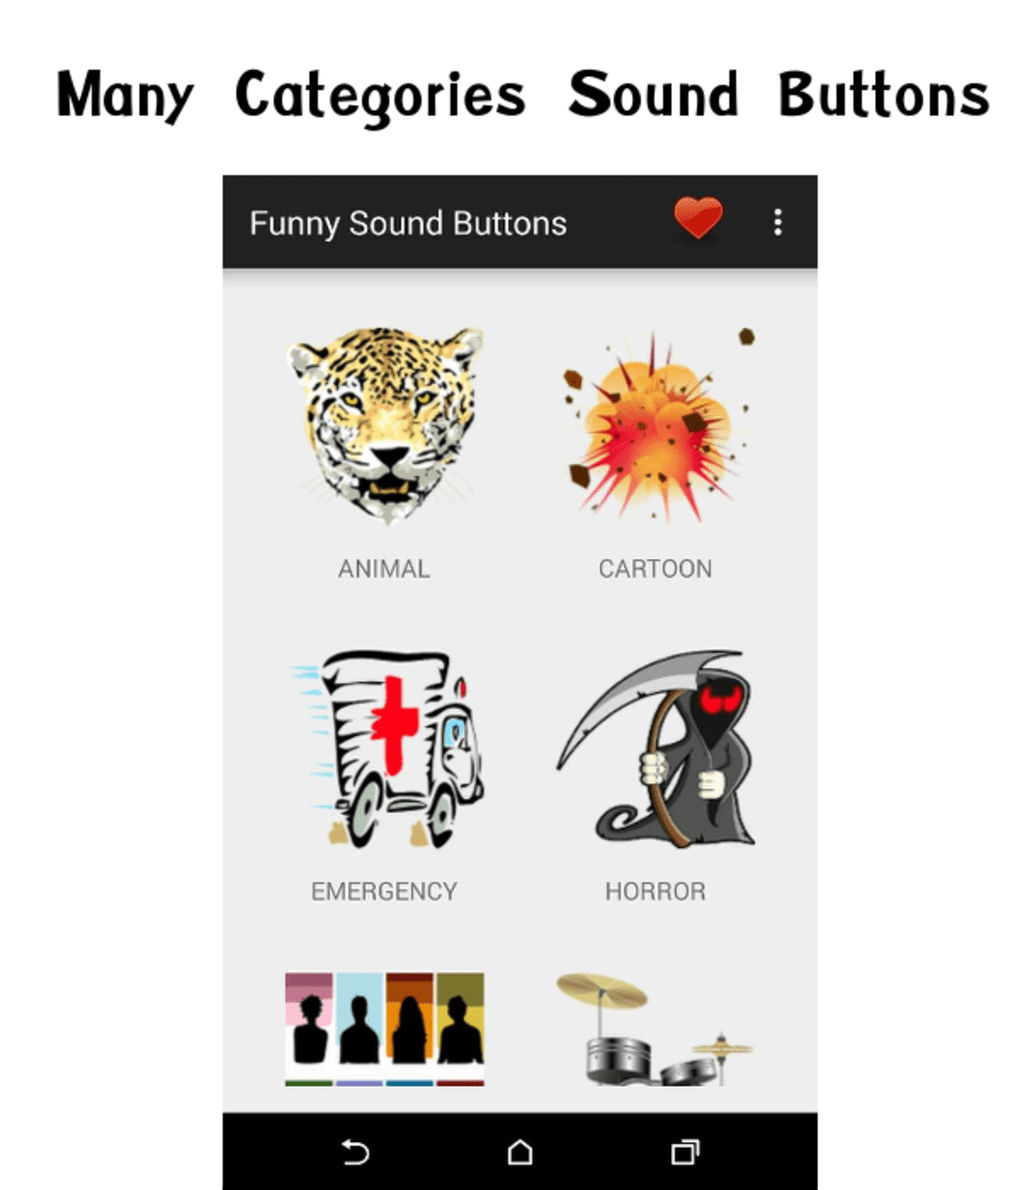 Categories Sound Buttons